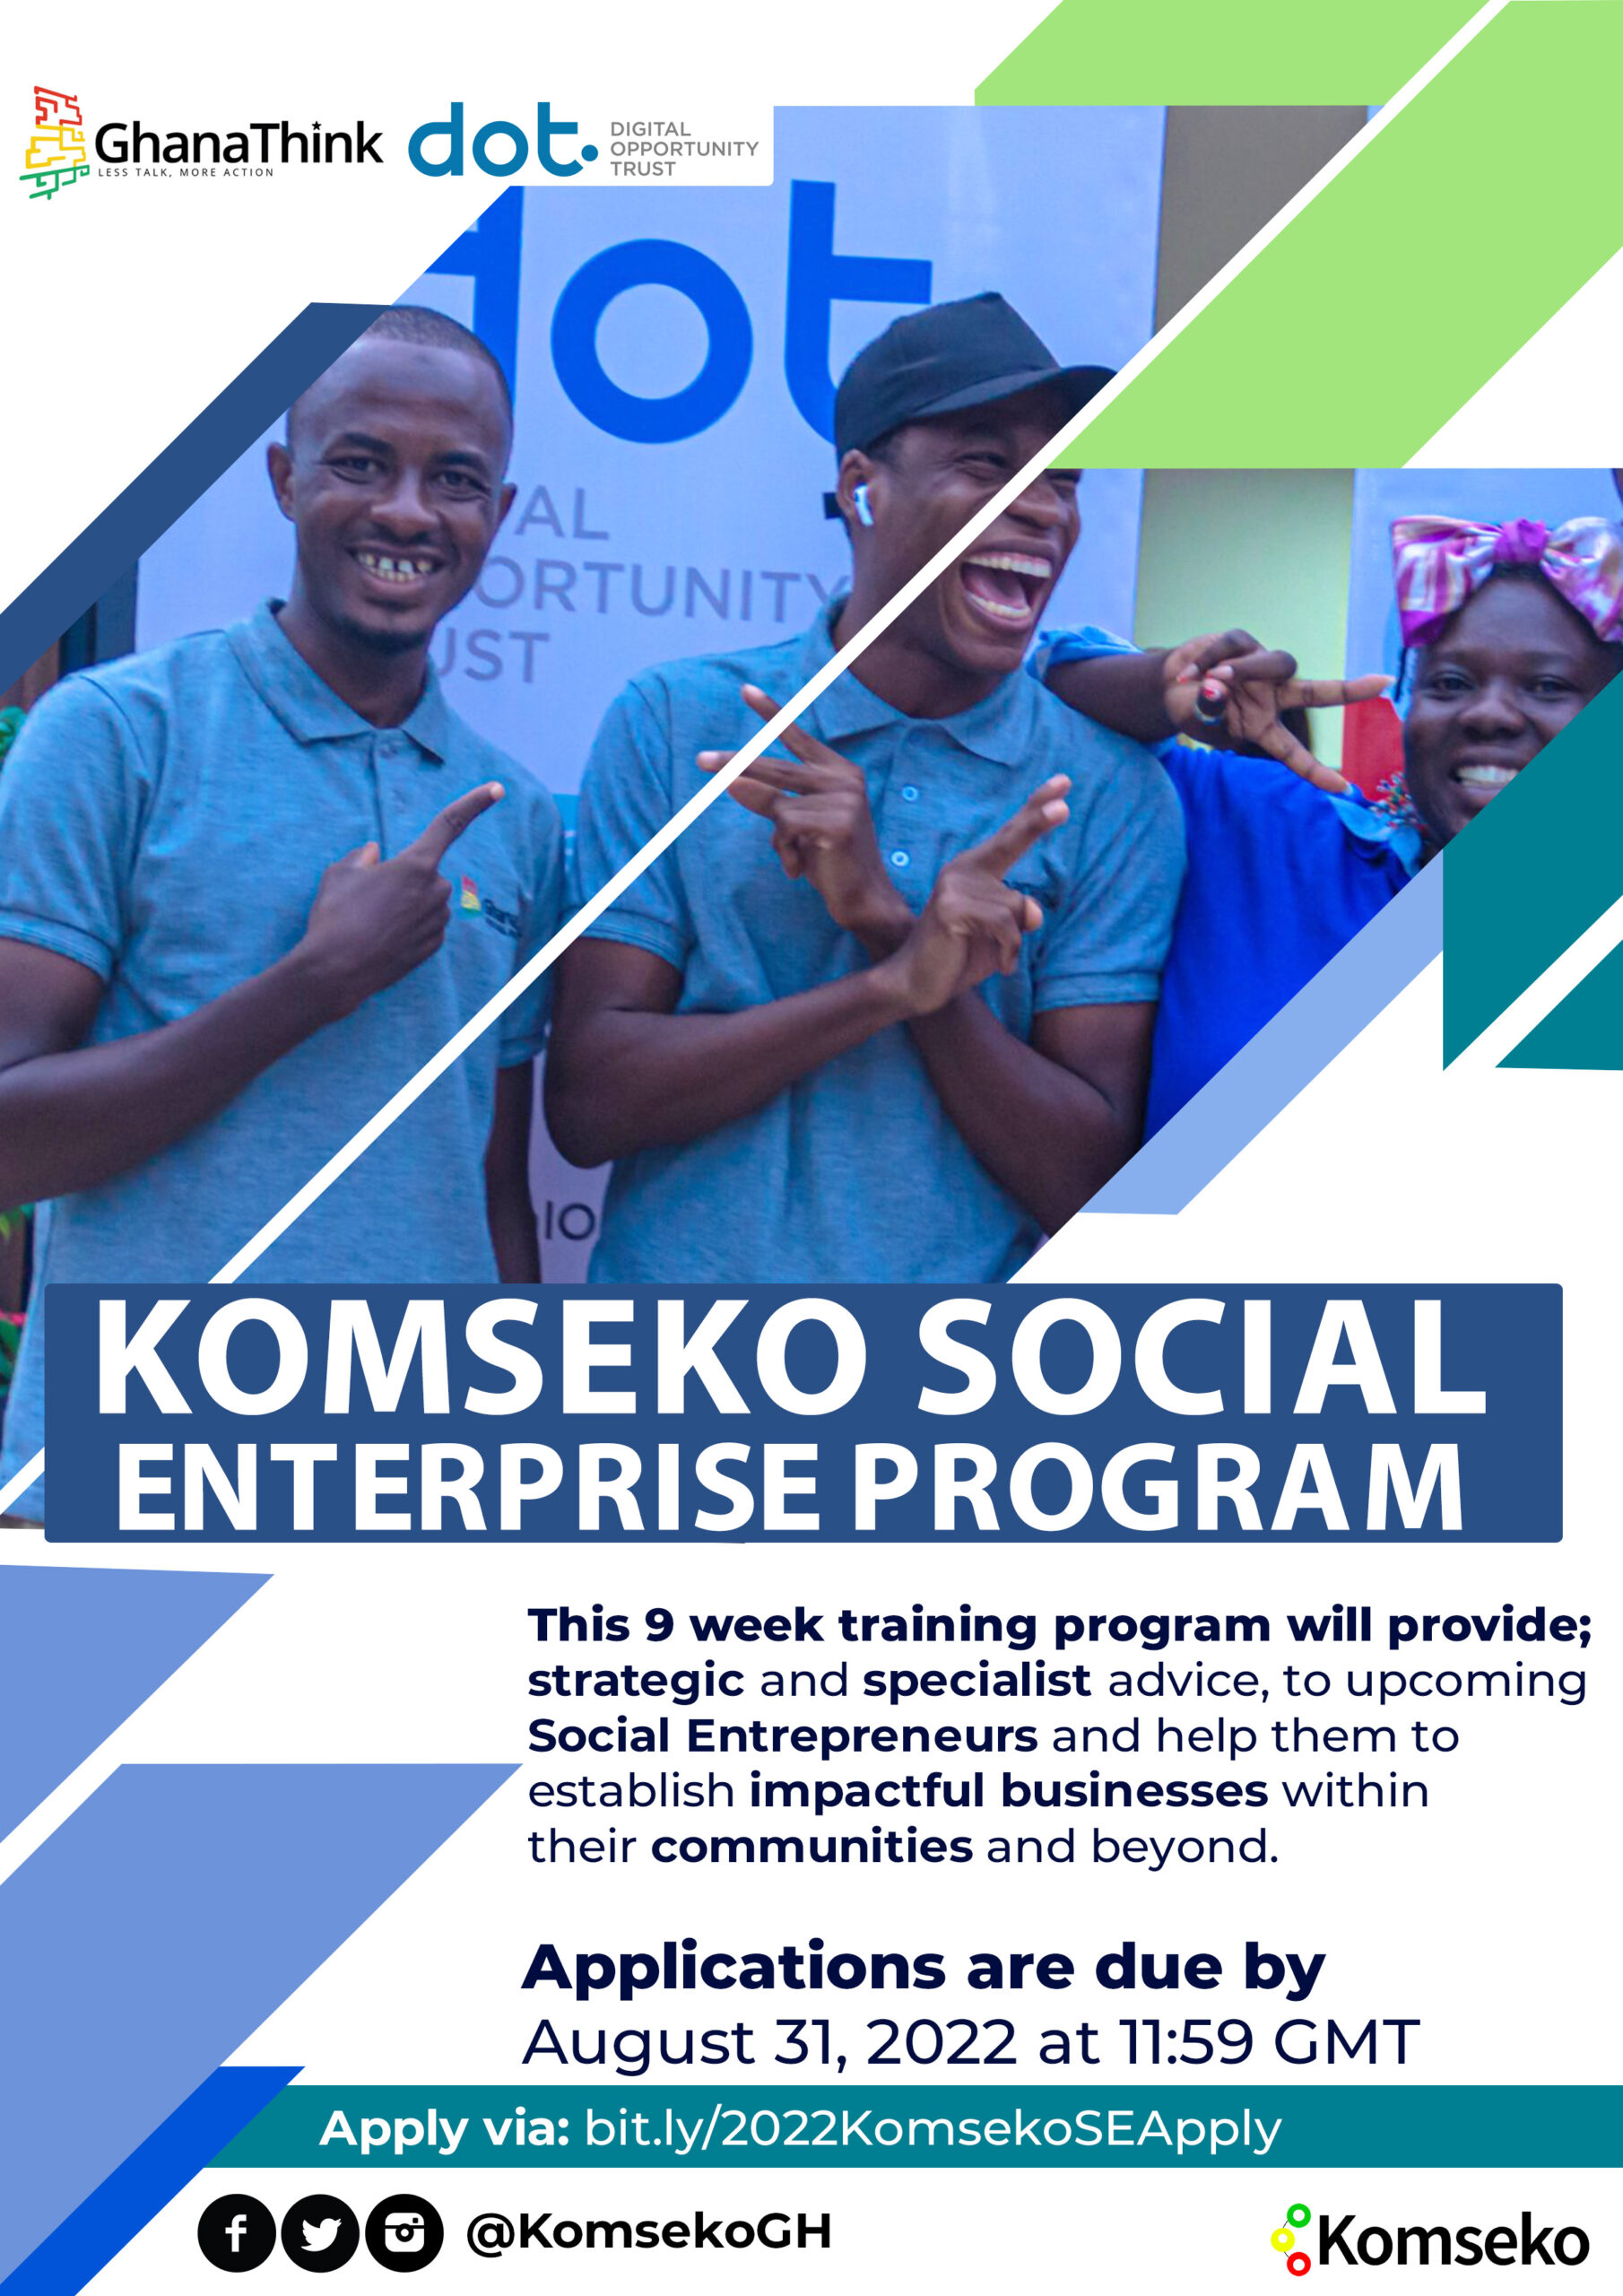 GhanaThink is training 100 social entrepreneurs in 2022 via its Komseko program